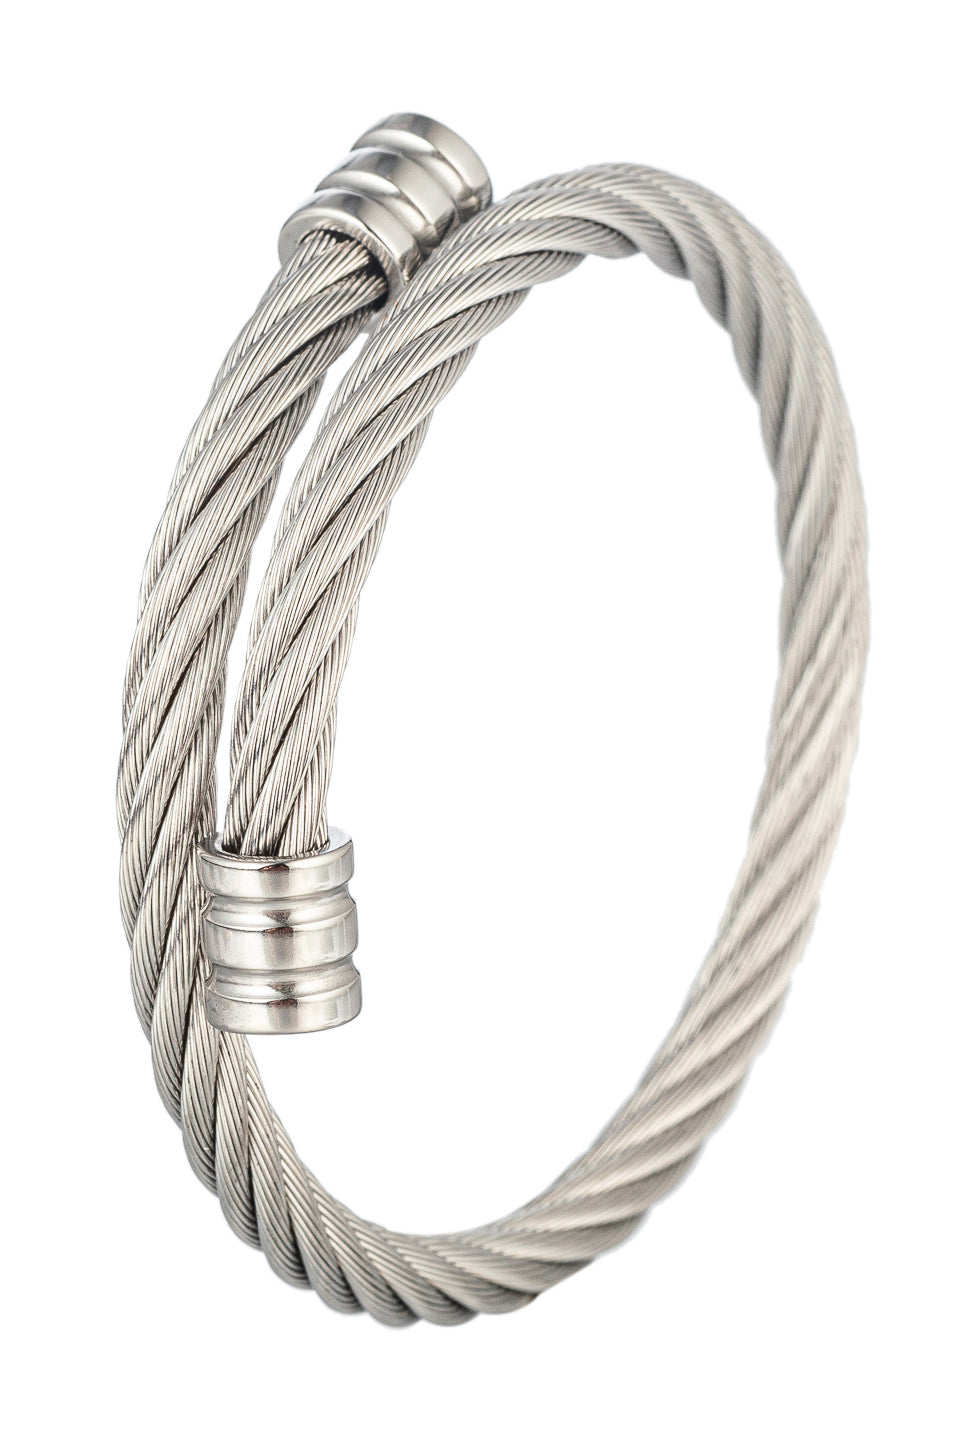 Wire Wrapped Bangle Bracelet Tutorial - the Stunning Sloppy Wrap